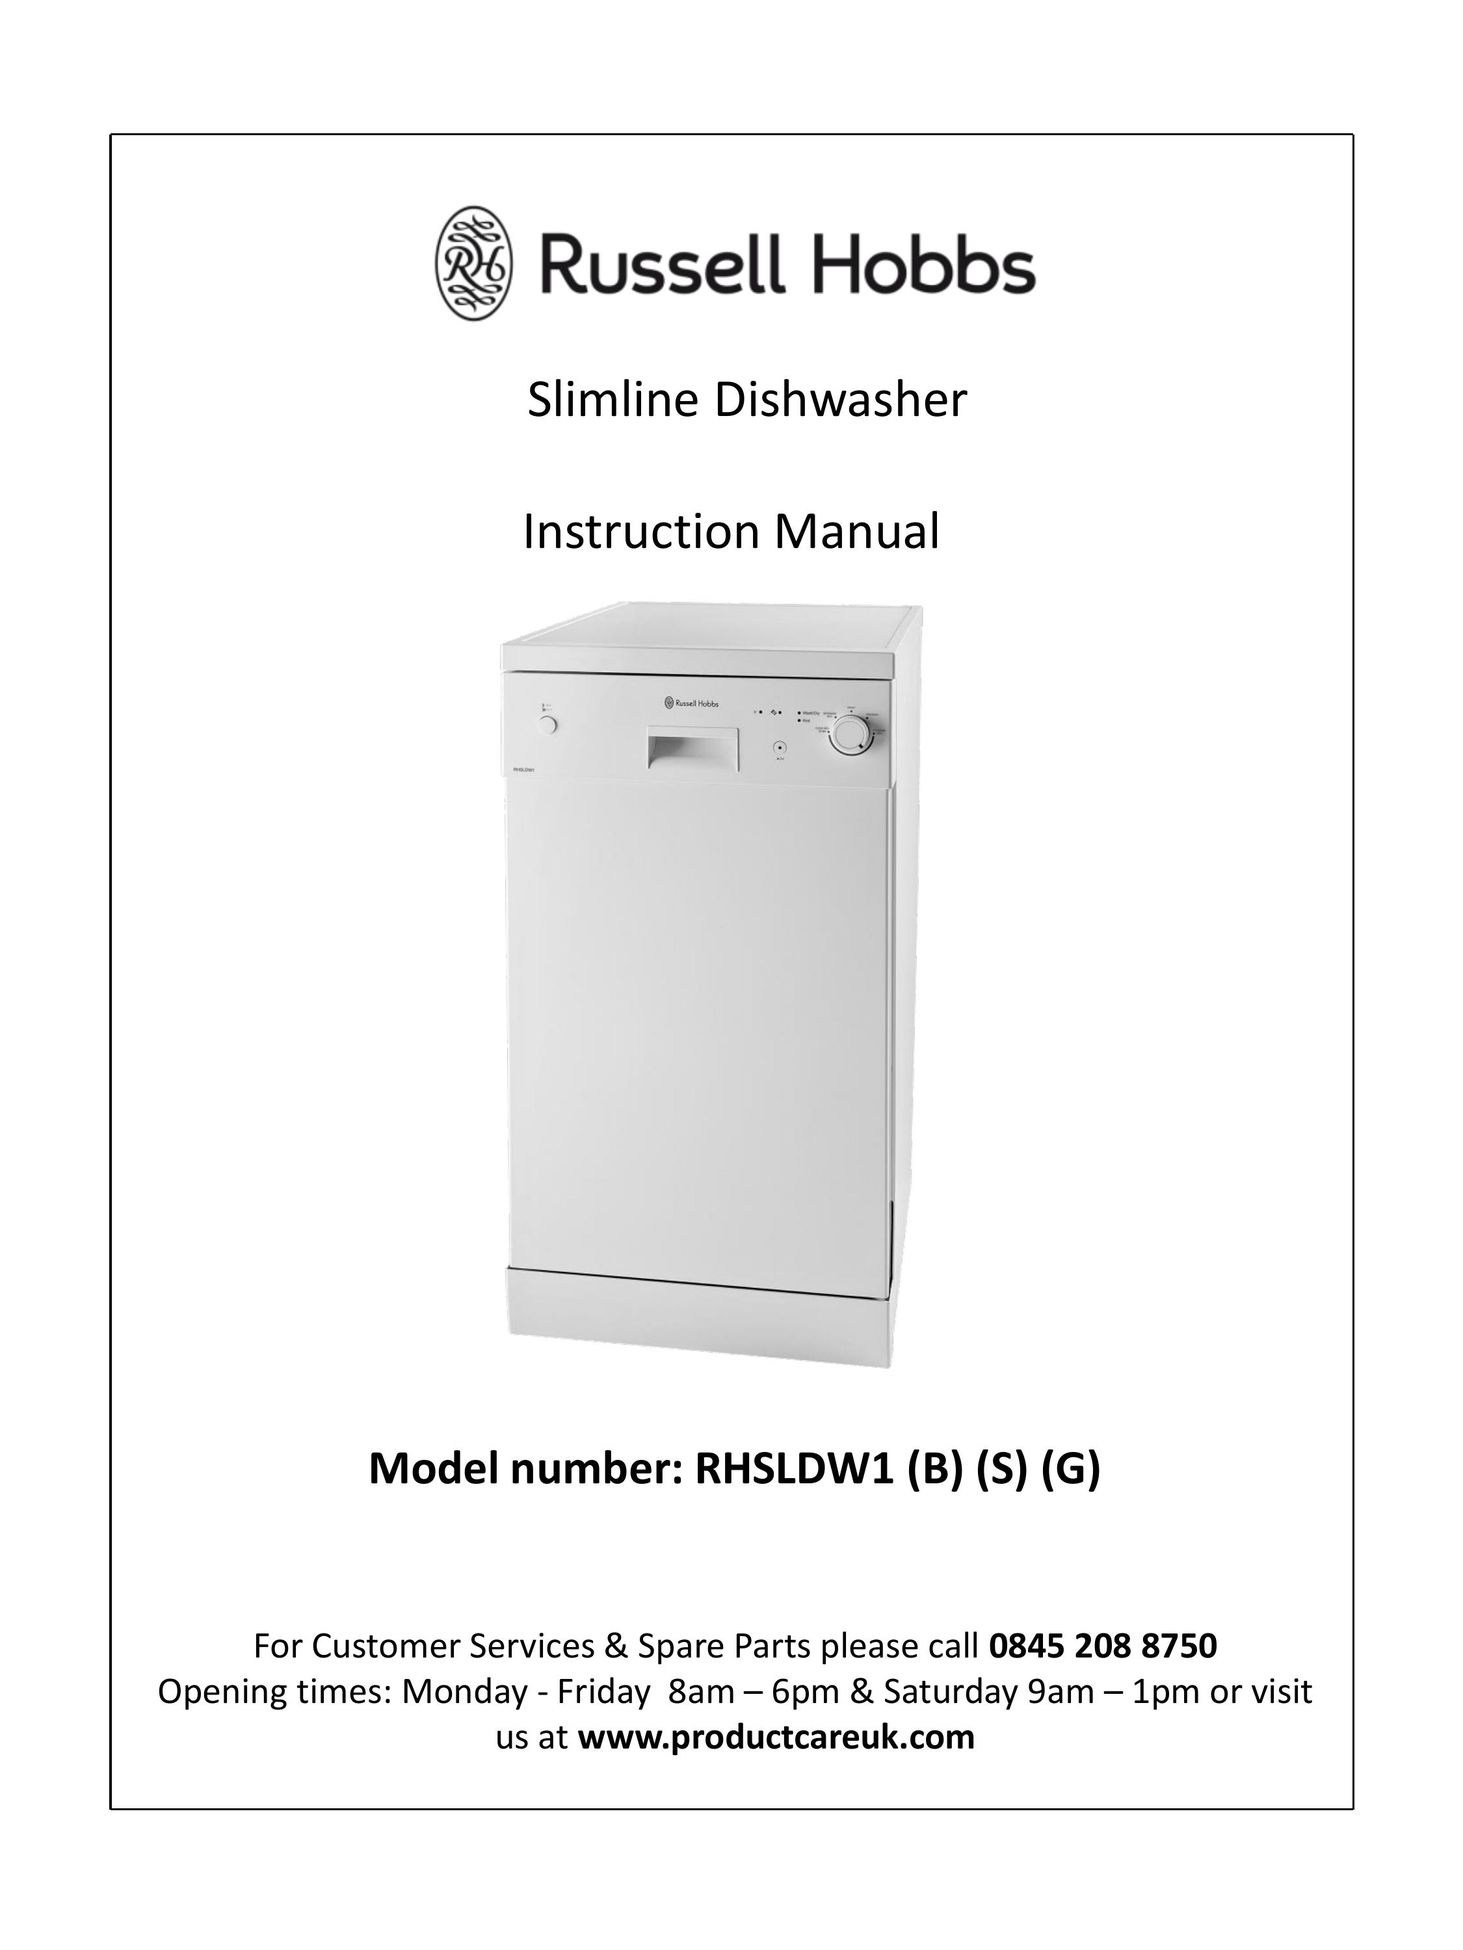 Russell Hobbs RHSLDW1G Appliance Trim Kit User Manual